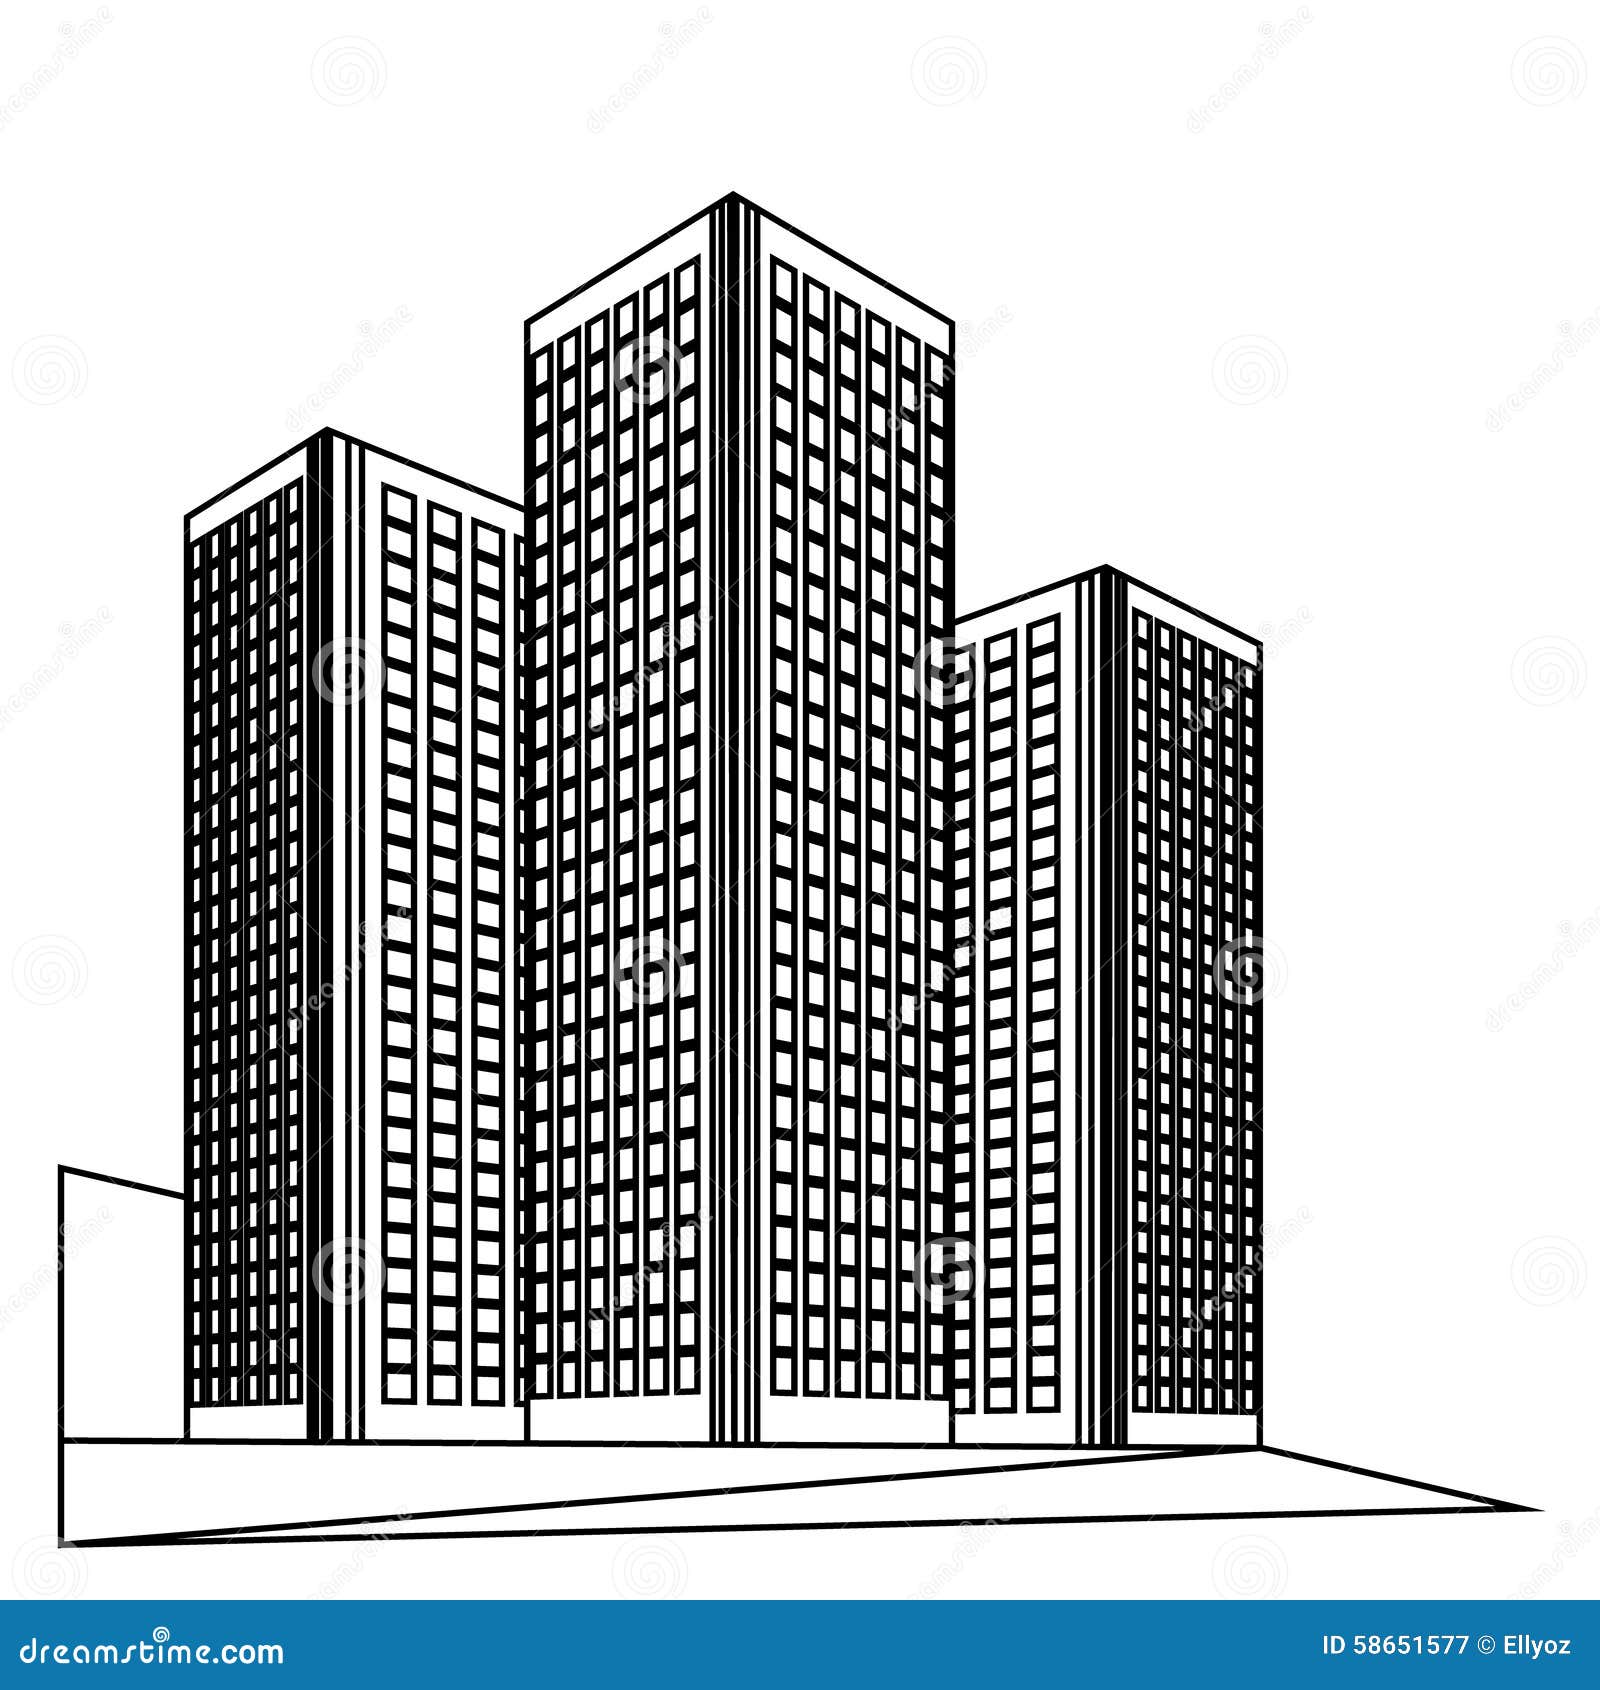 City Skyscrapers stock vector. Illustration of flat, modern - 58651577